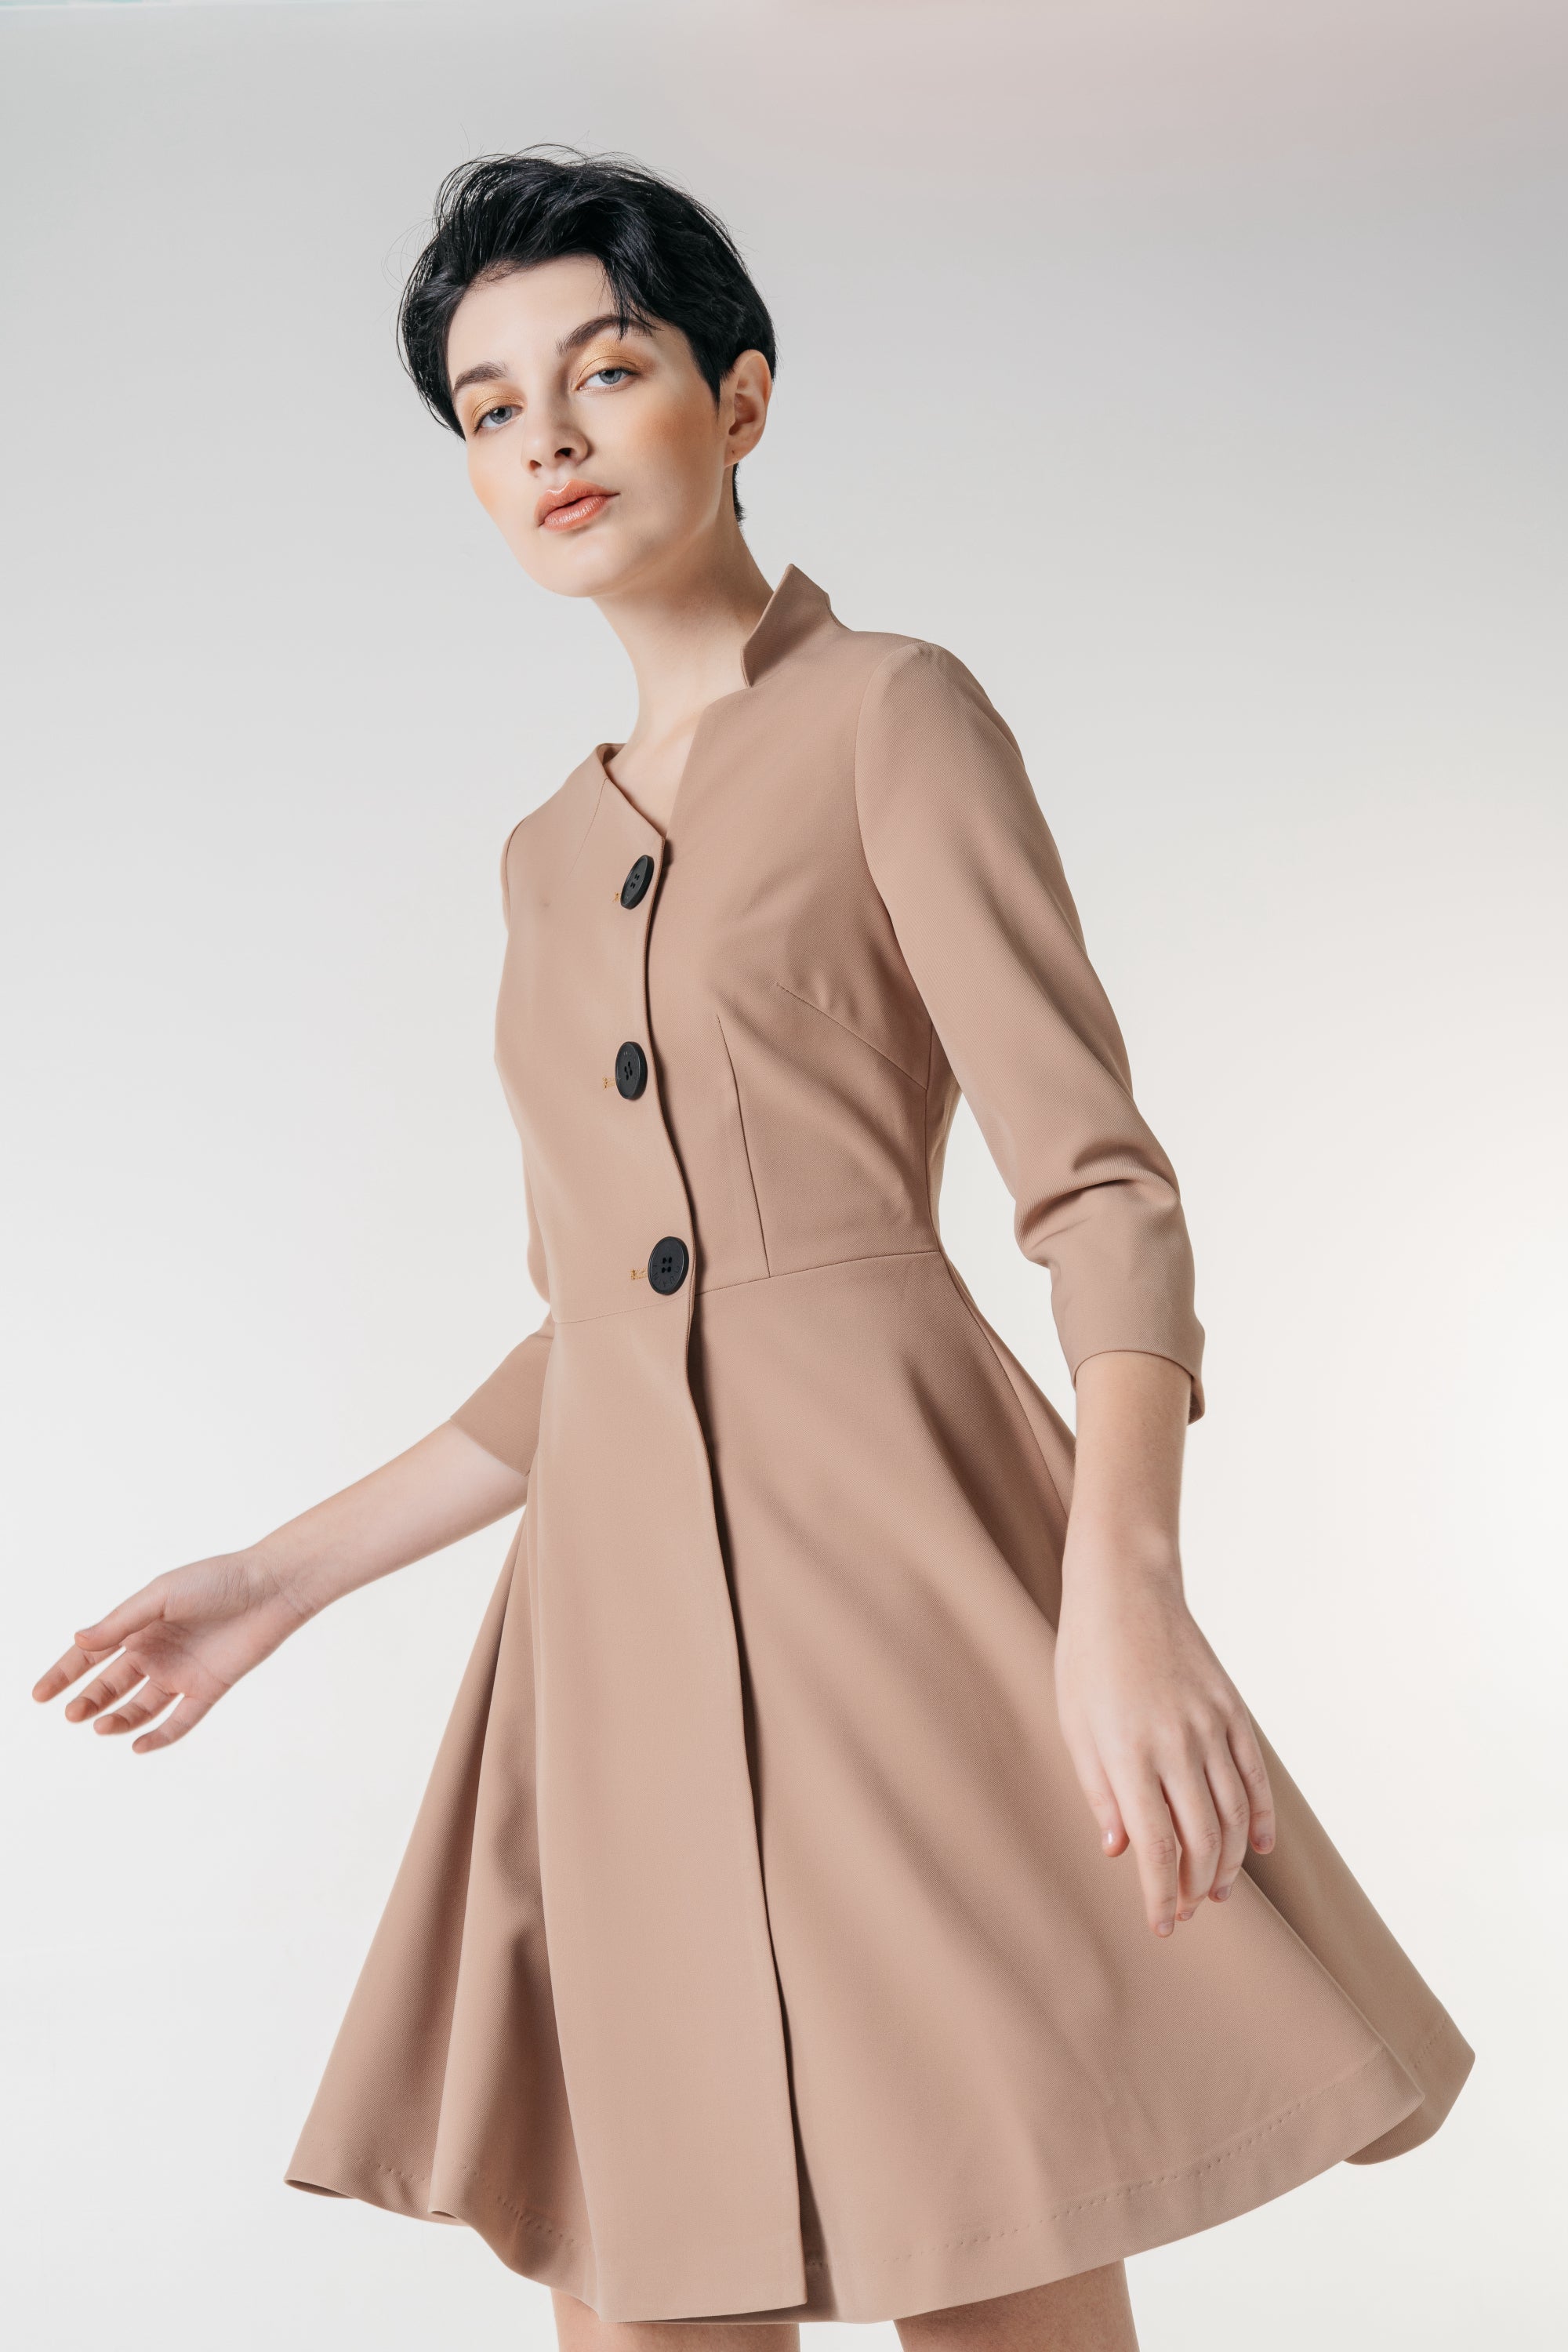 Asymmetrical Suit Collar Short Sleeve Dress - By Quaint